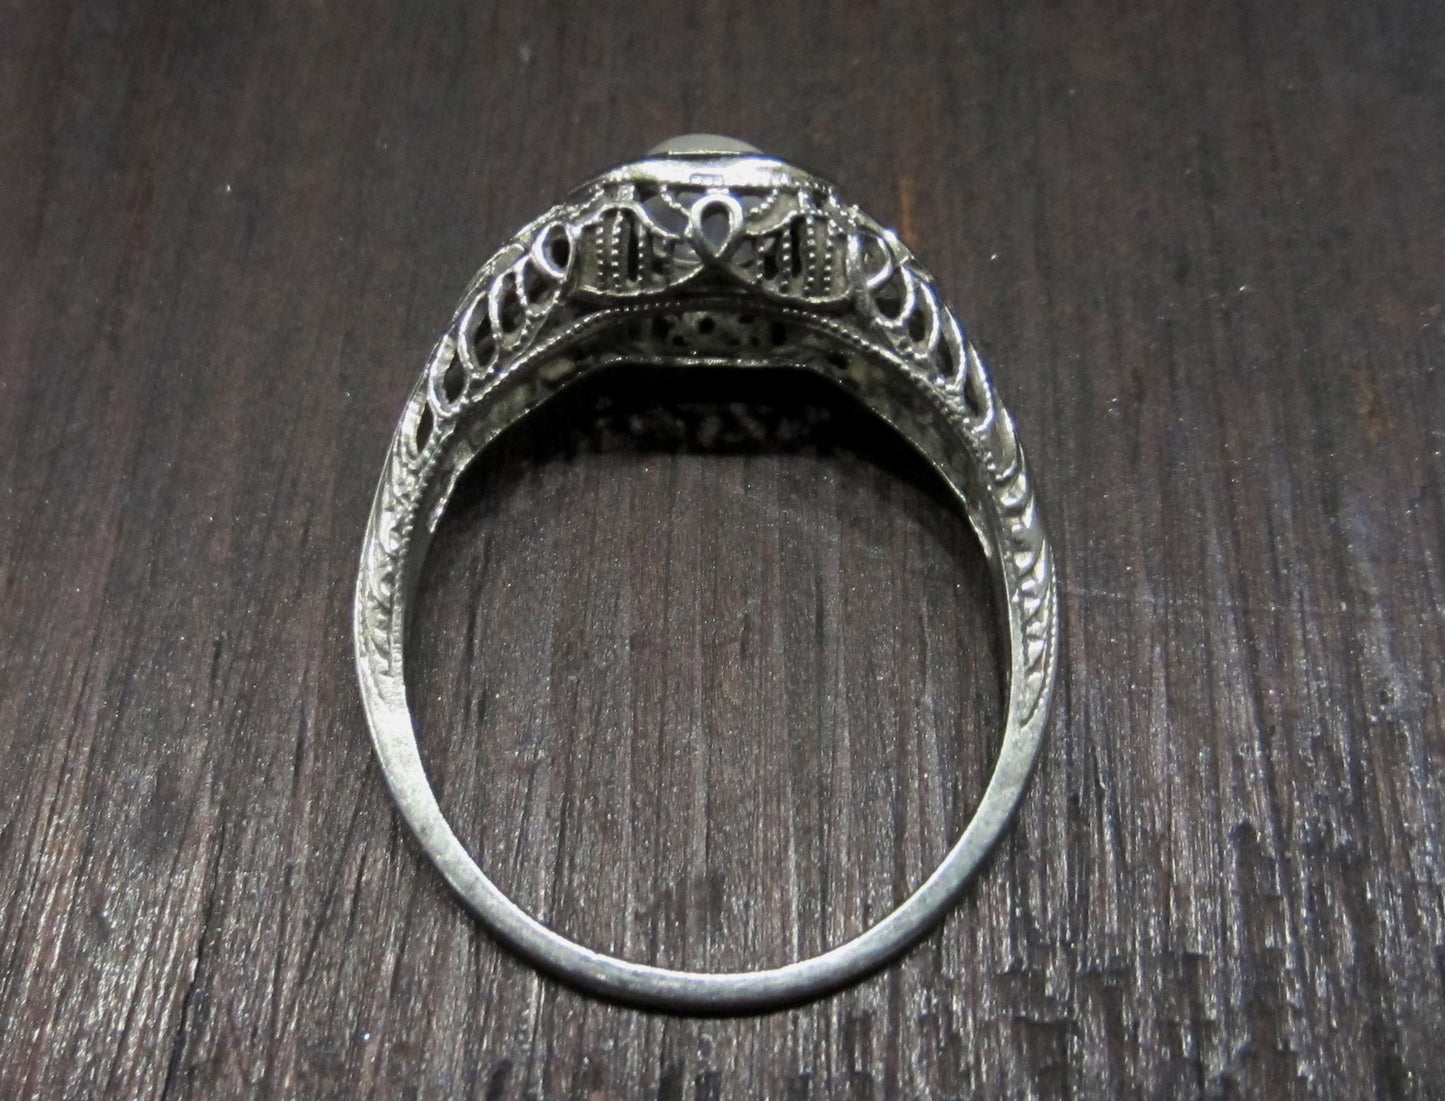 SOLD--Edwardian Moonstone and Old European Diamond Ring 18k, c. 1915